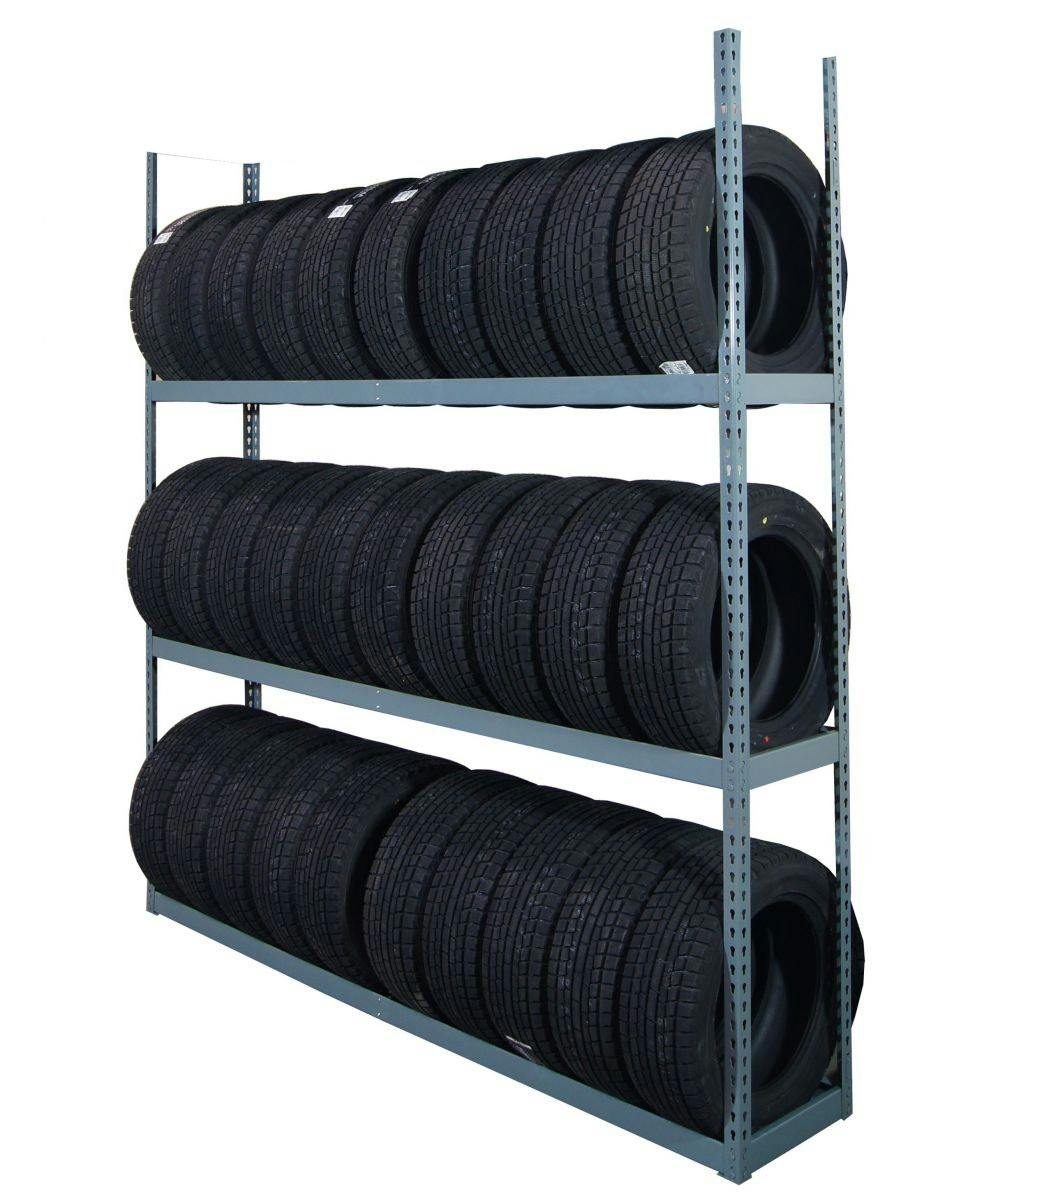 top-tier-martins-storage-for-pcr-suv-tires